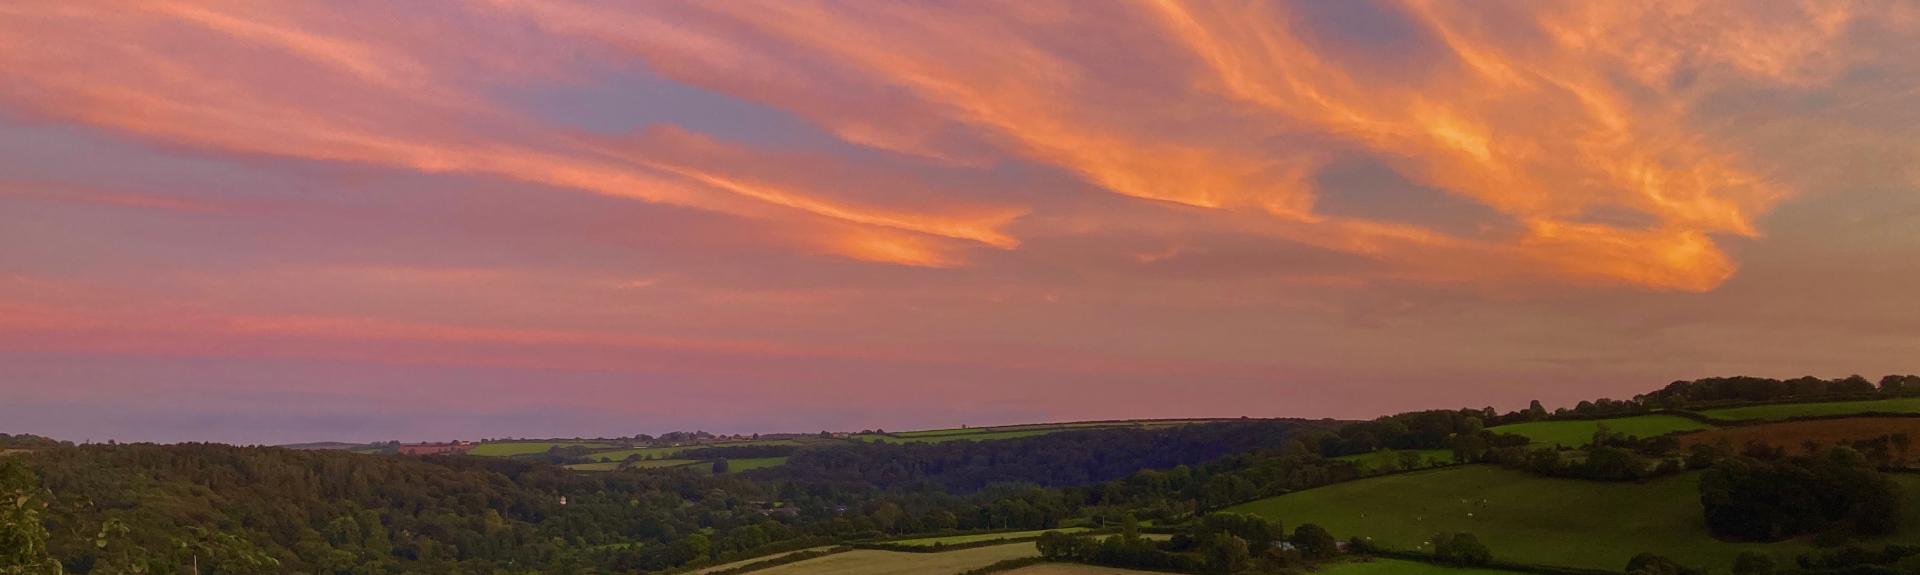 cloudes reflect the setting sun over a summer hillside ladscape of Devon fields